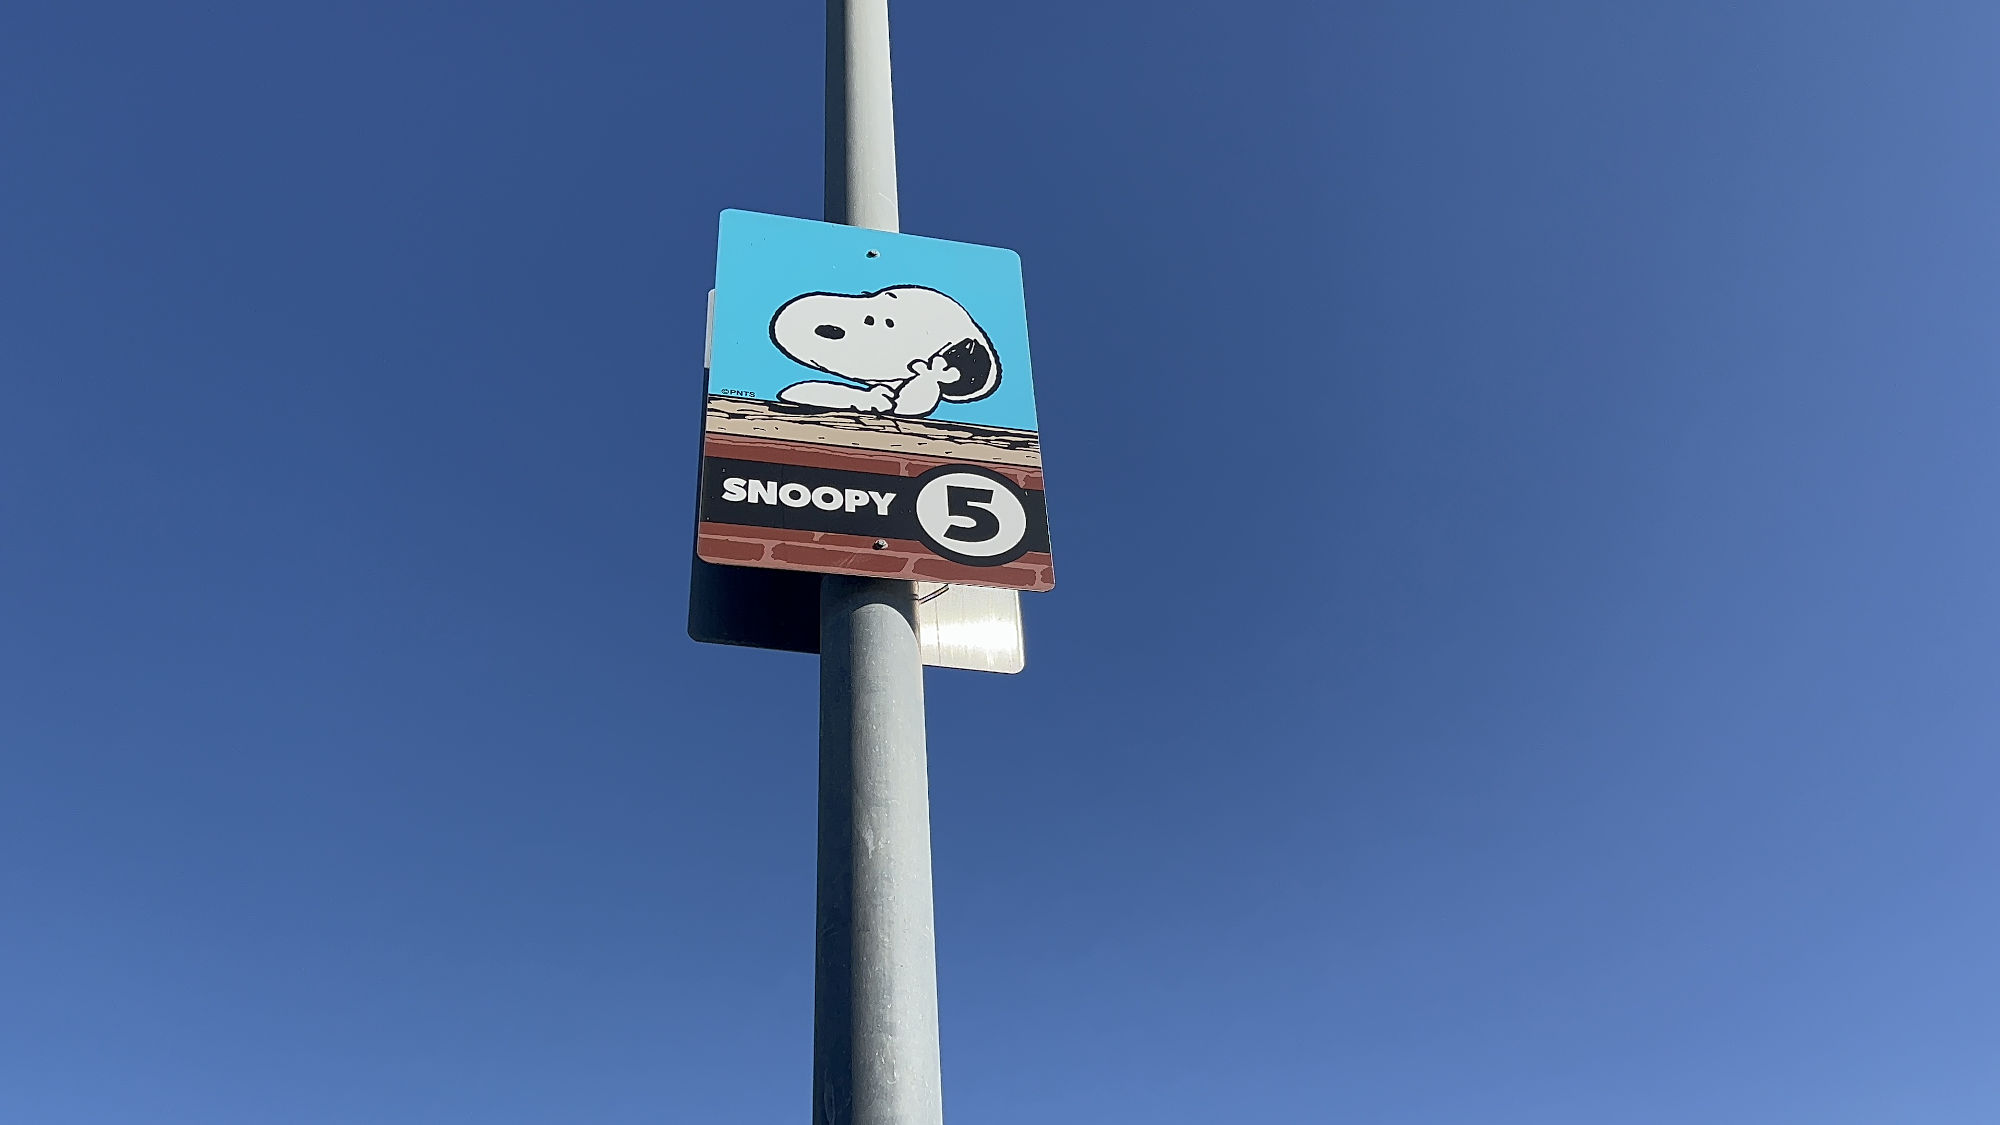 Knott's Berry Farm Parking Lot Snoopy 5 Section